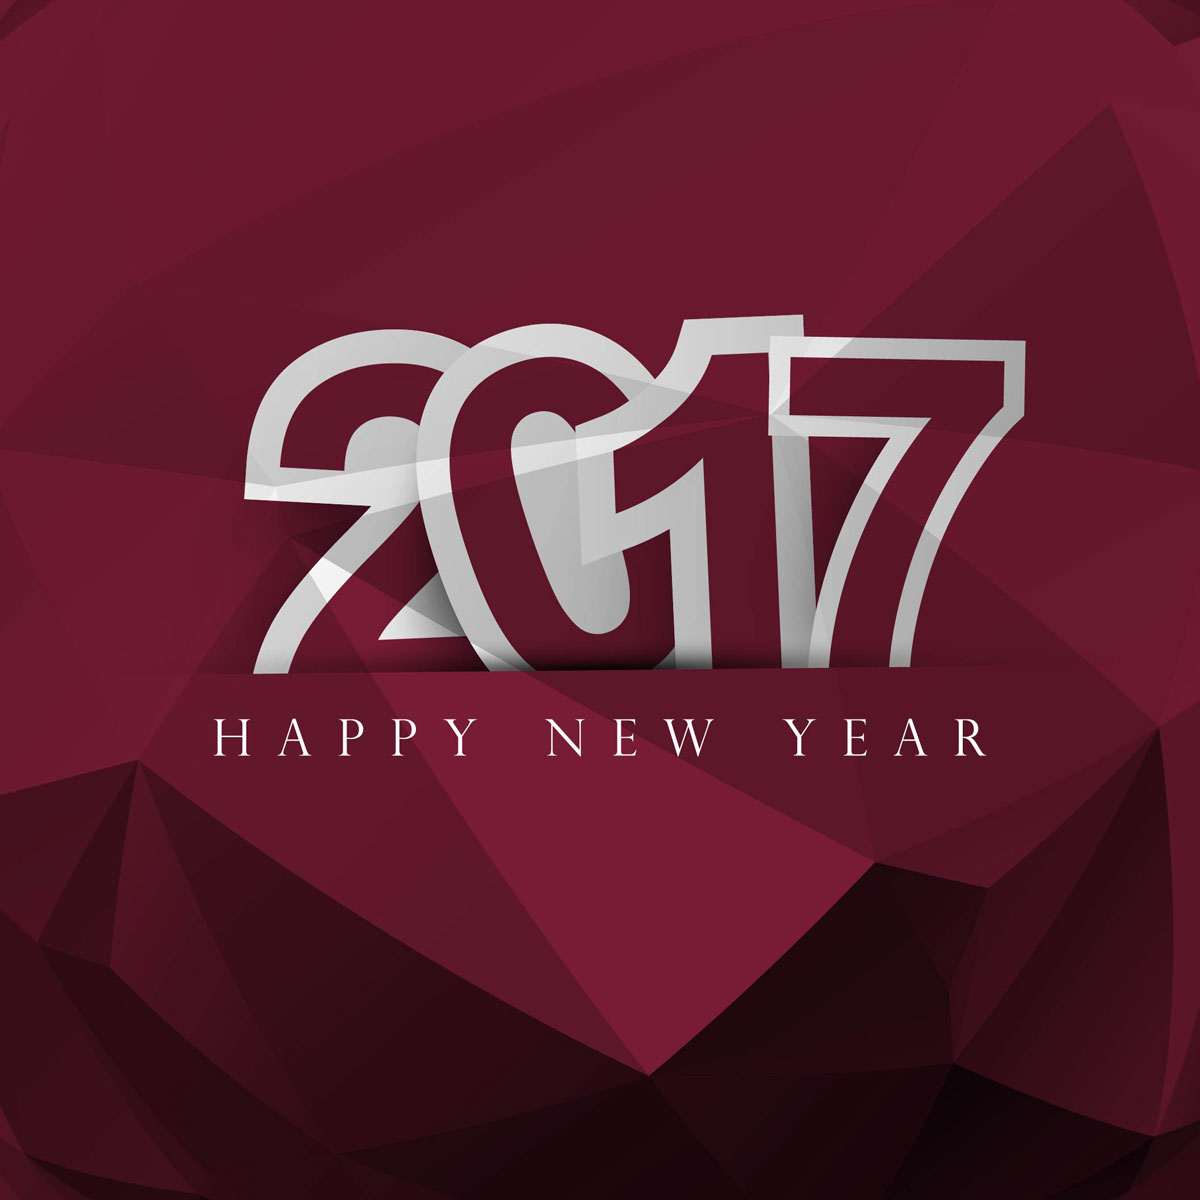 Happy New Year Hd Image - Happy New Year 2018 Dutch - HD Wallpaper 